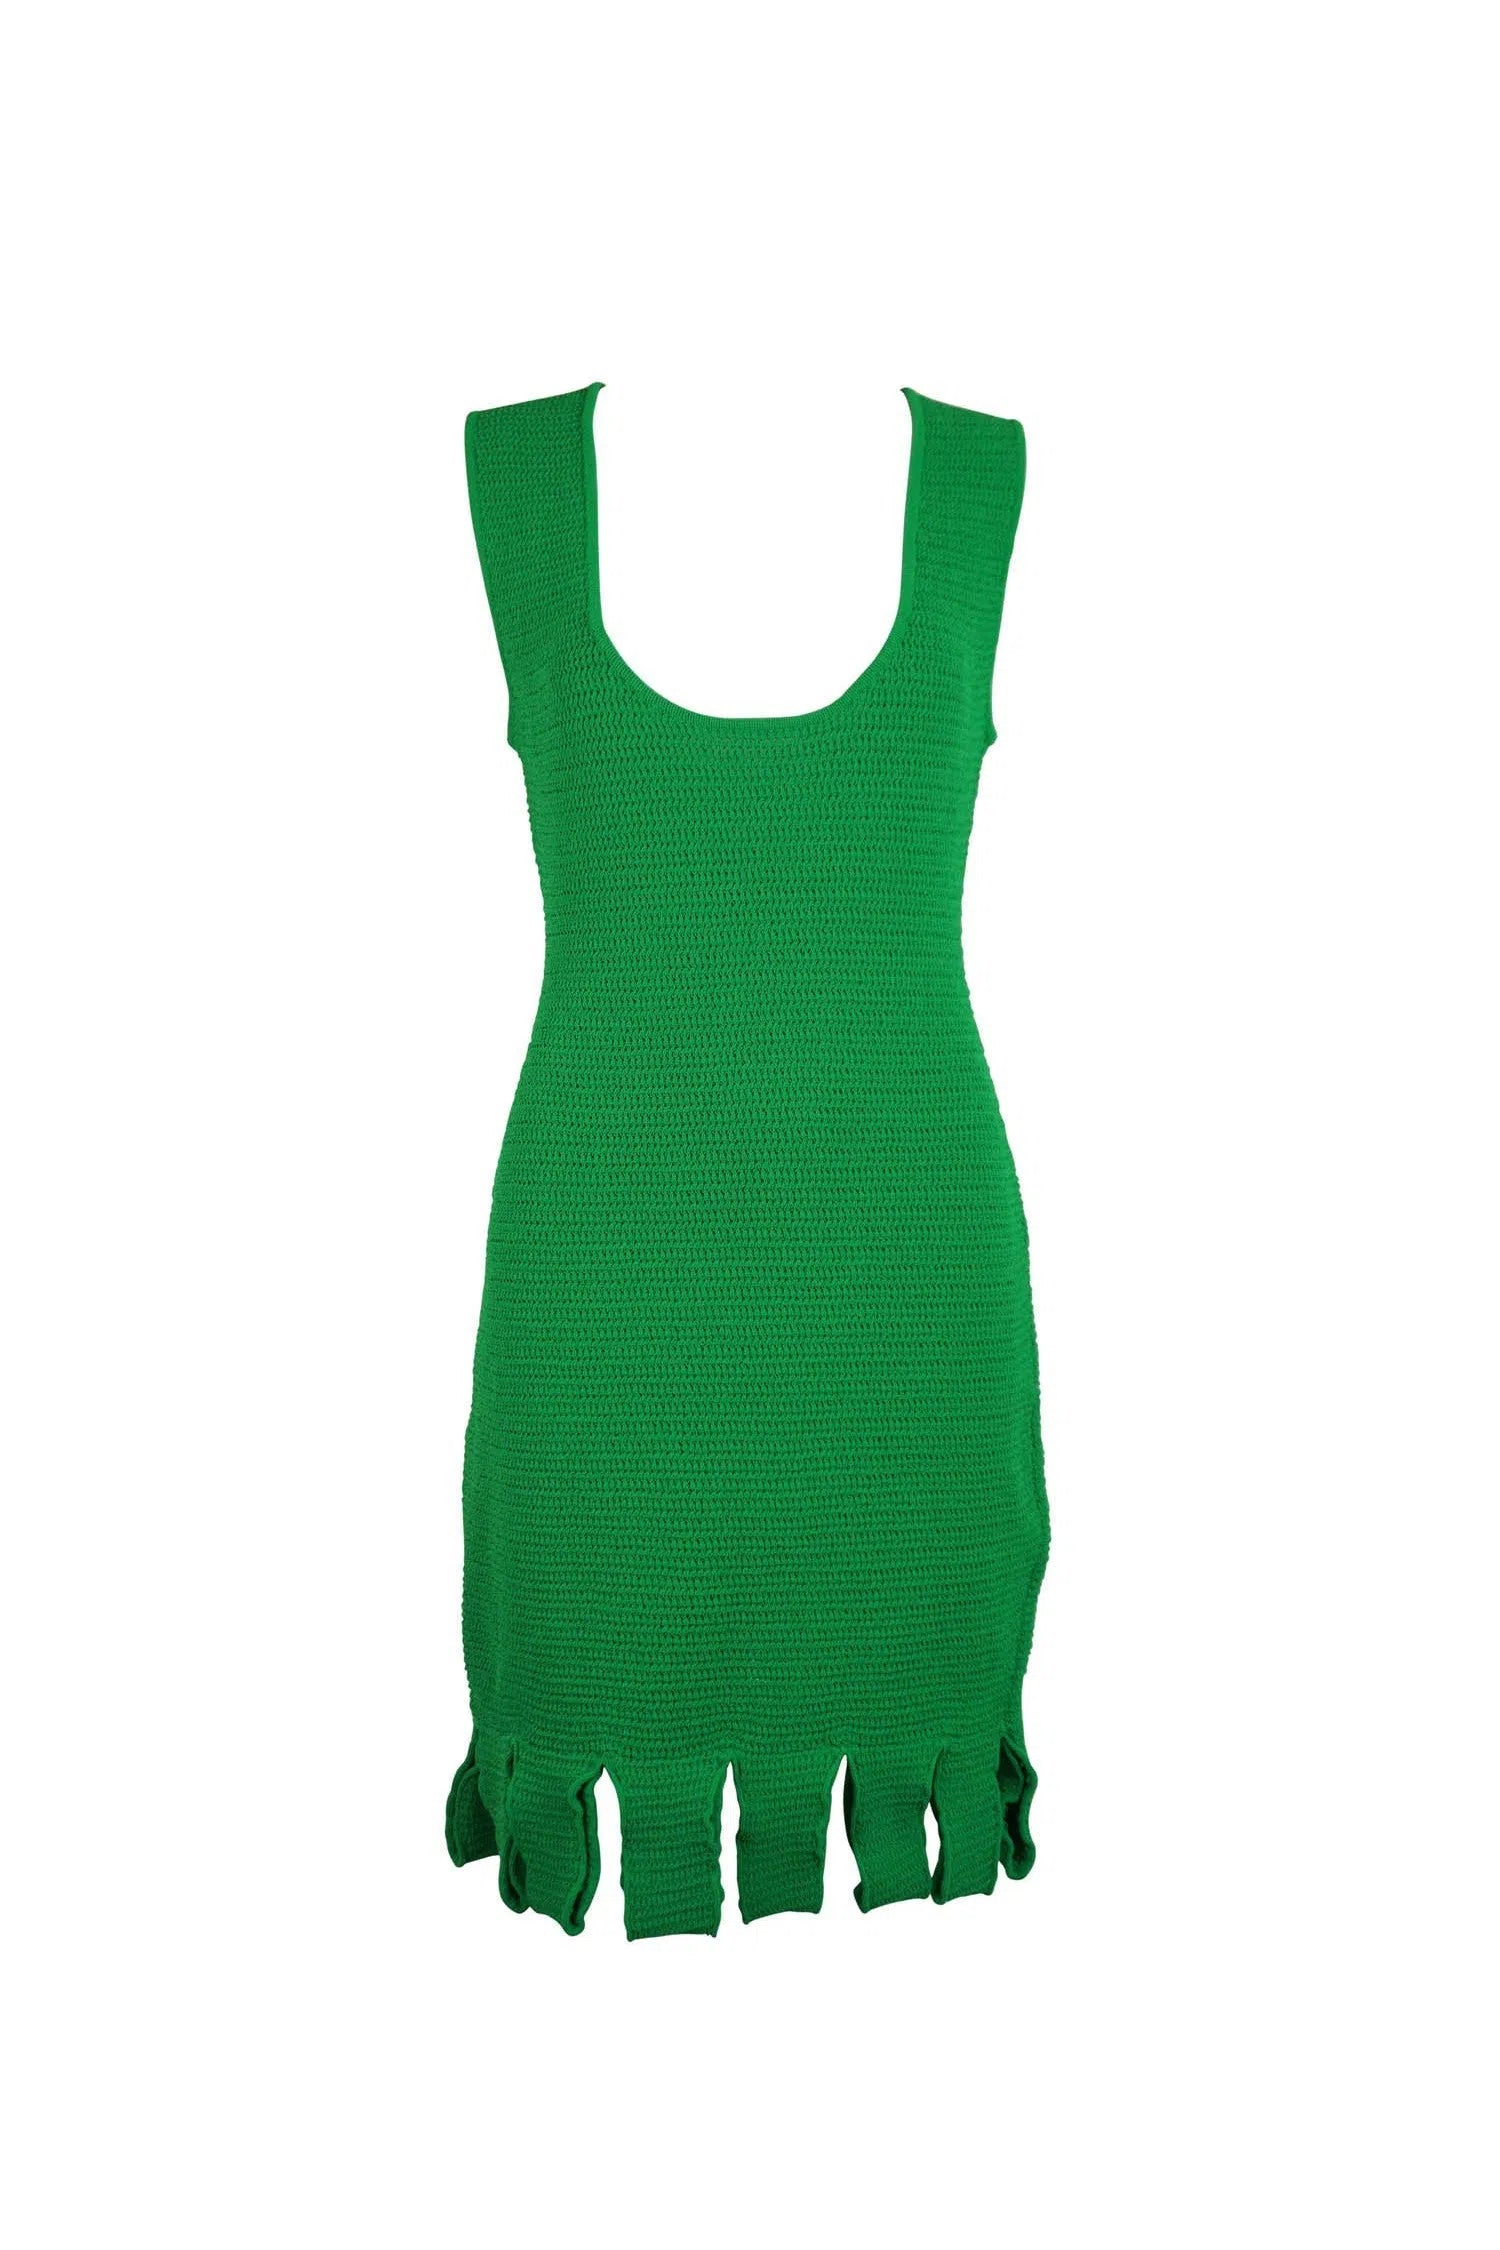 Bottega Veneta Green Knit Tank Dress - Foxy Couture Carmel